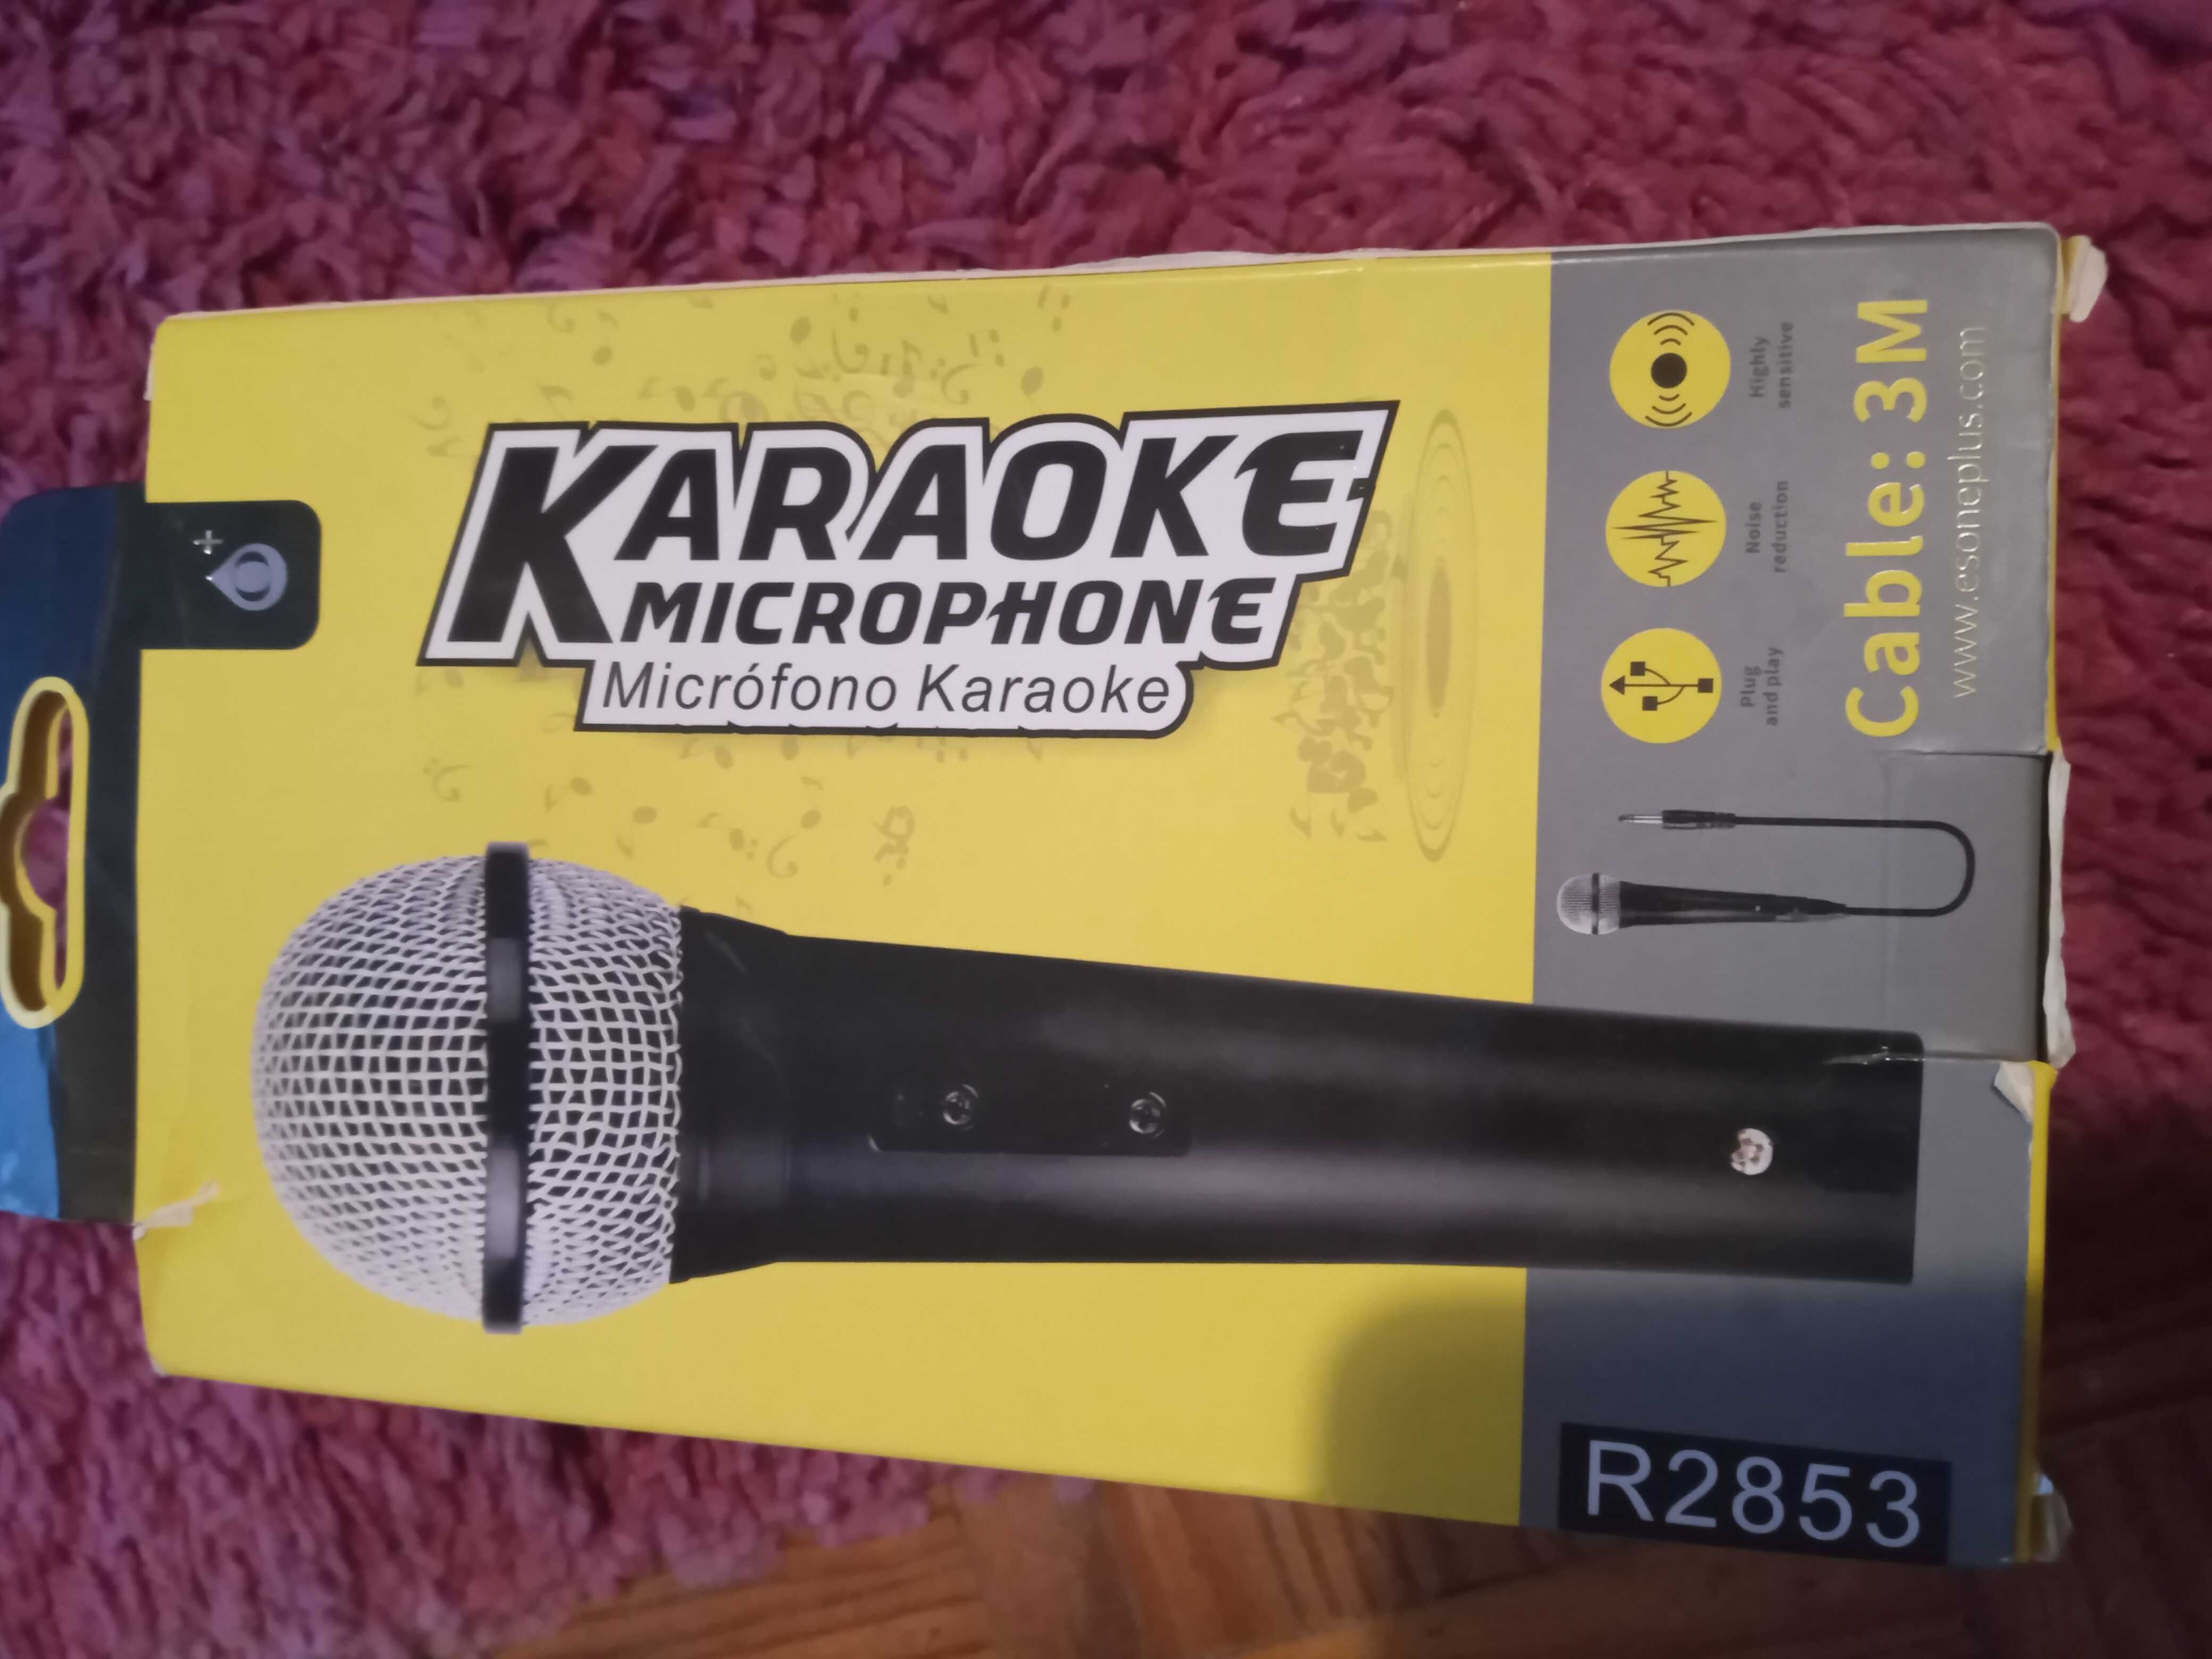 Microfone karaoke novo 3metros